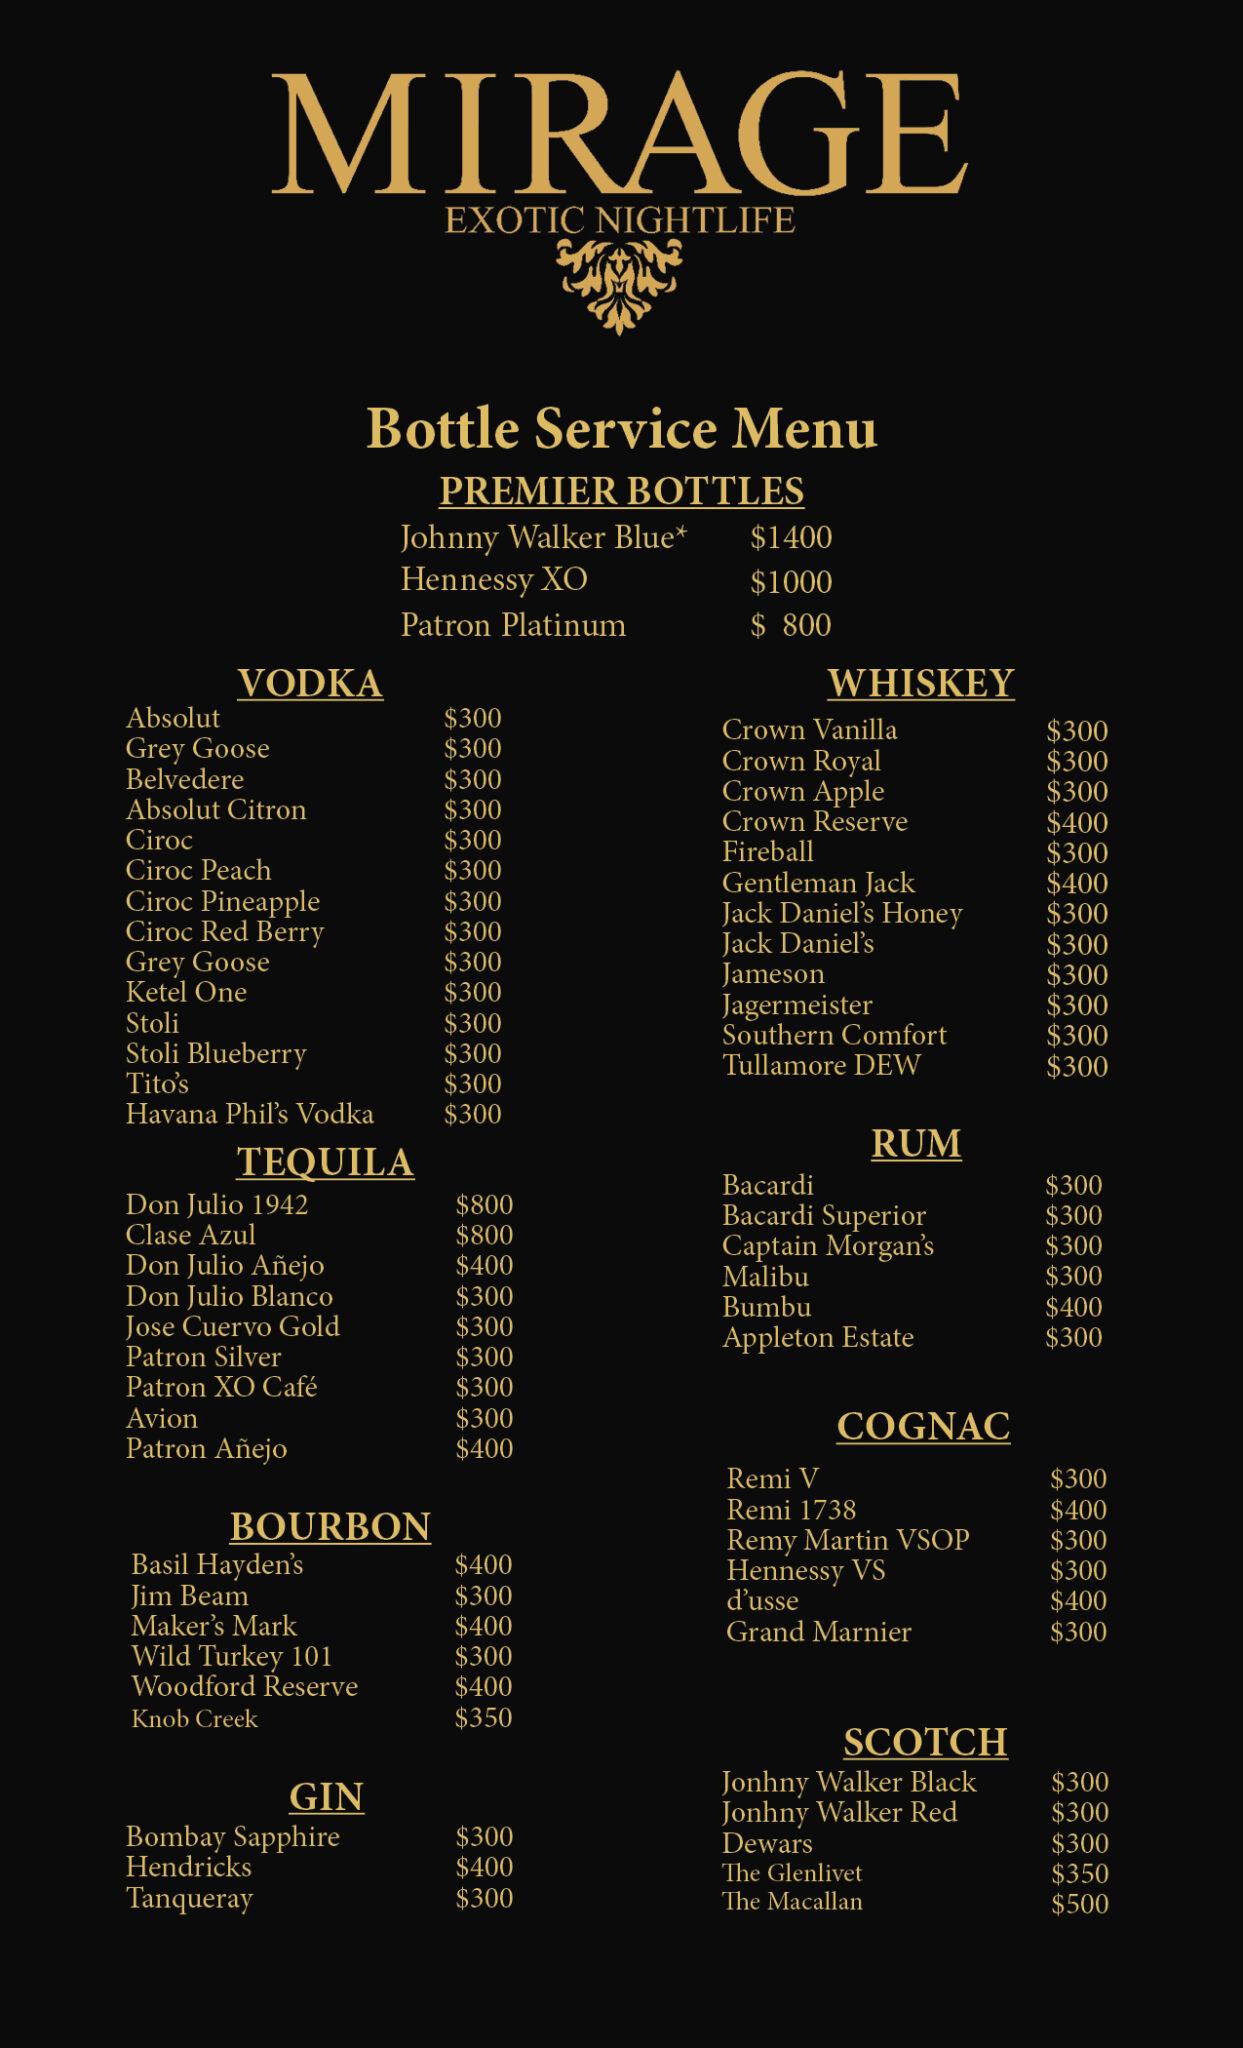 Mirage bottle service menu